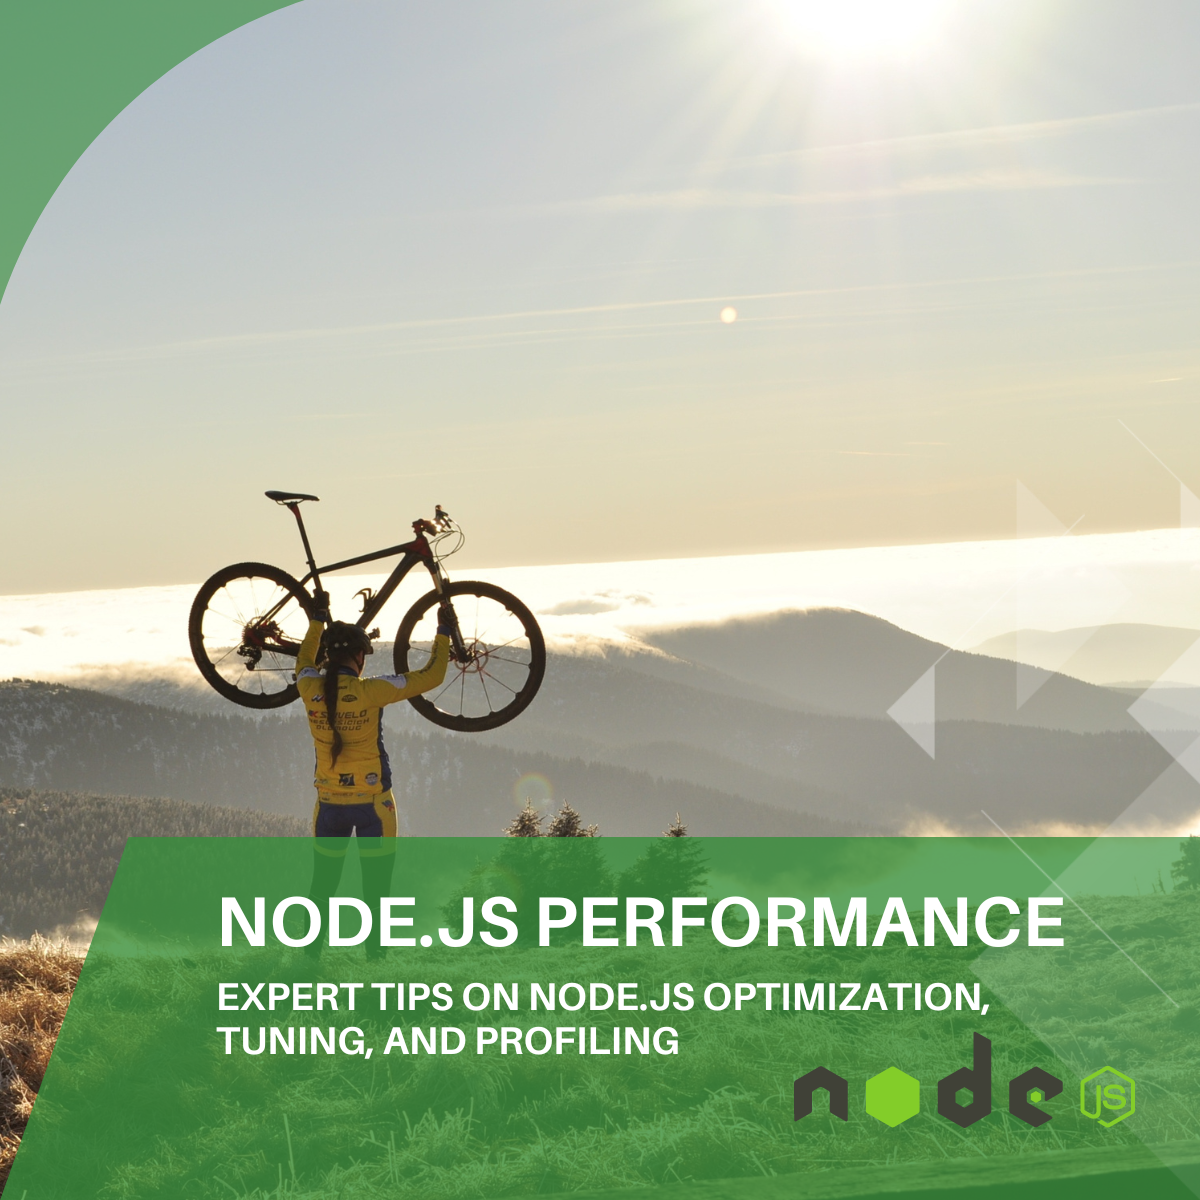 Expert Tips on Node.Js Optimization, Tuning, and Profiling